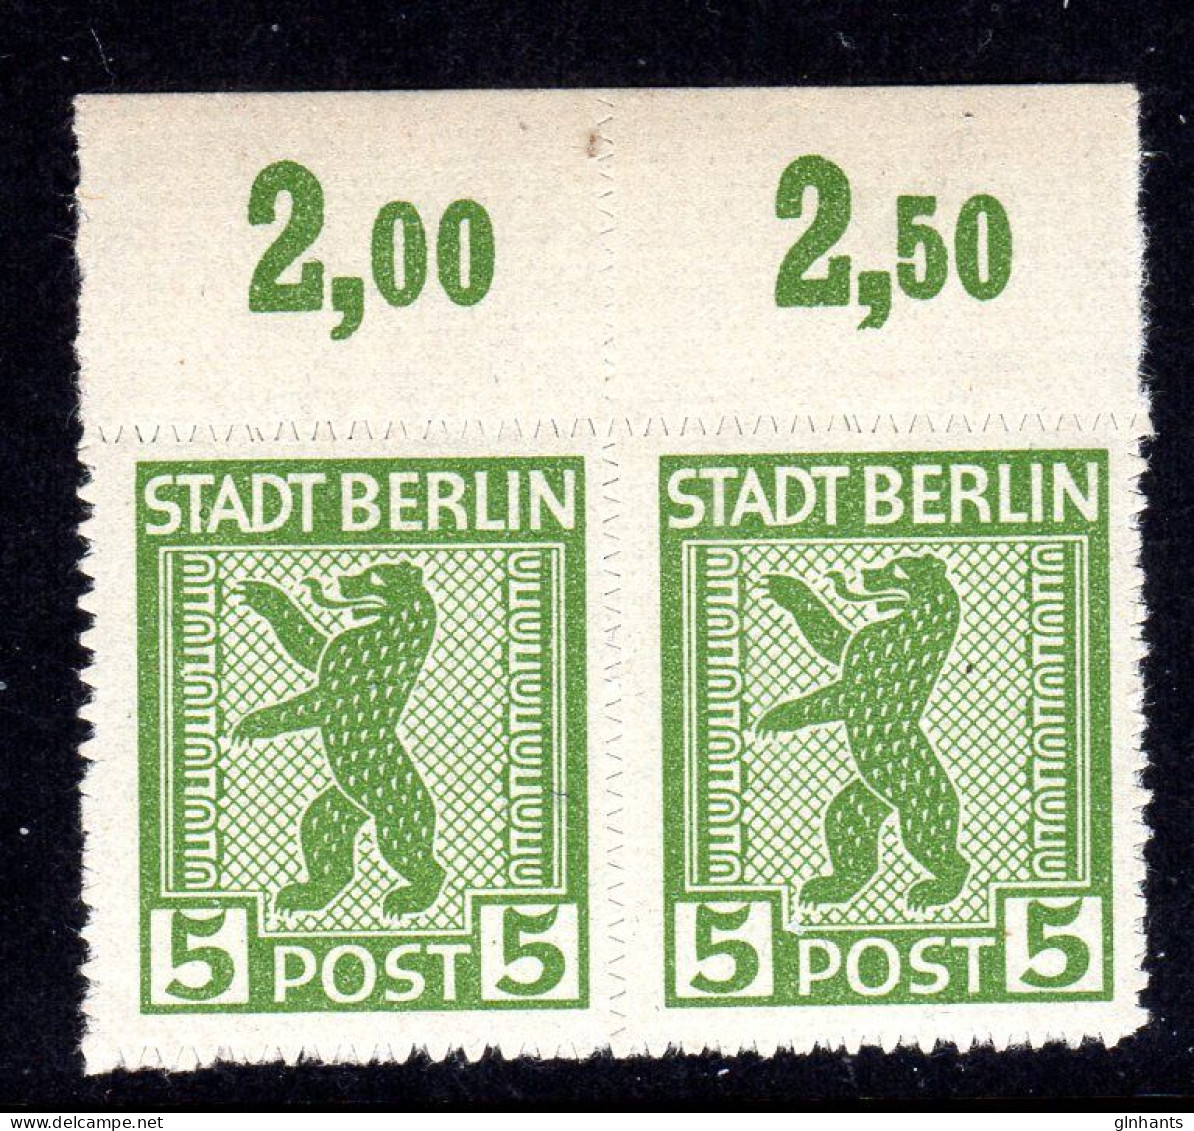 GERMANY BERLIN-BRANDENBURG - 1945 5PF BEAR STAMP IN PAIR ZIGZAG ROULETTE FINE MNH ** - Berlijn & Brandenburg